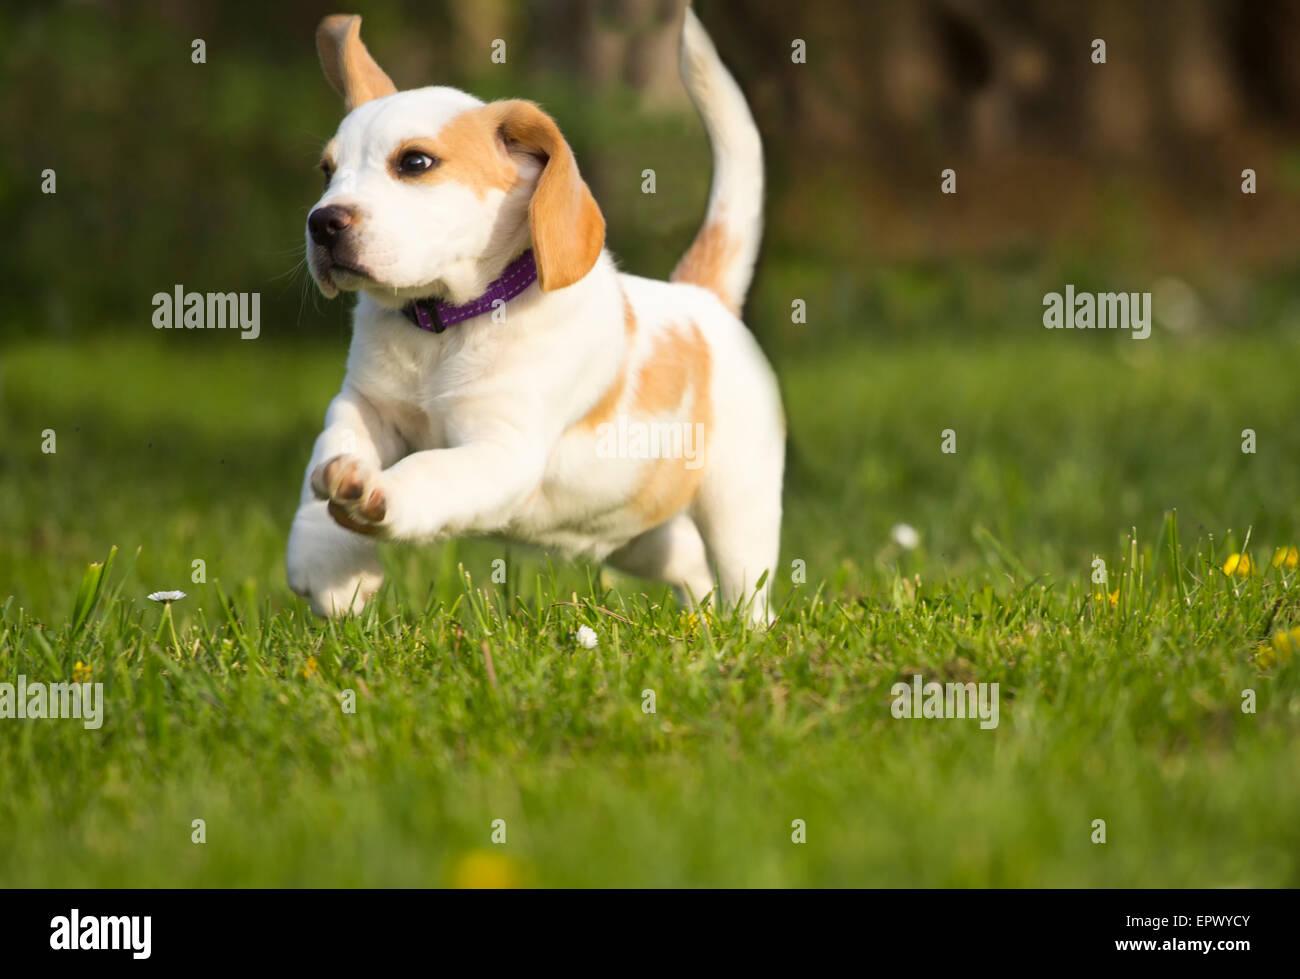 Cute beagle puppy running on grass. Stock Photo